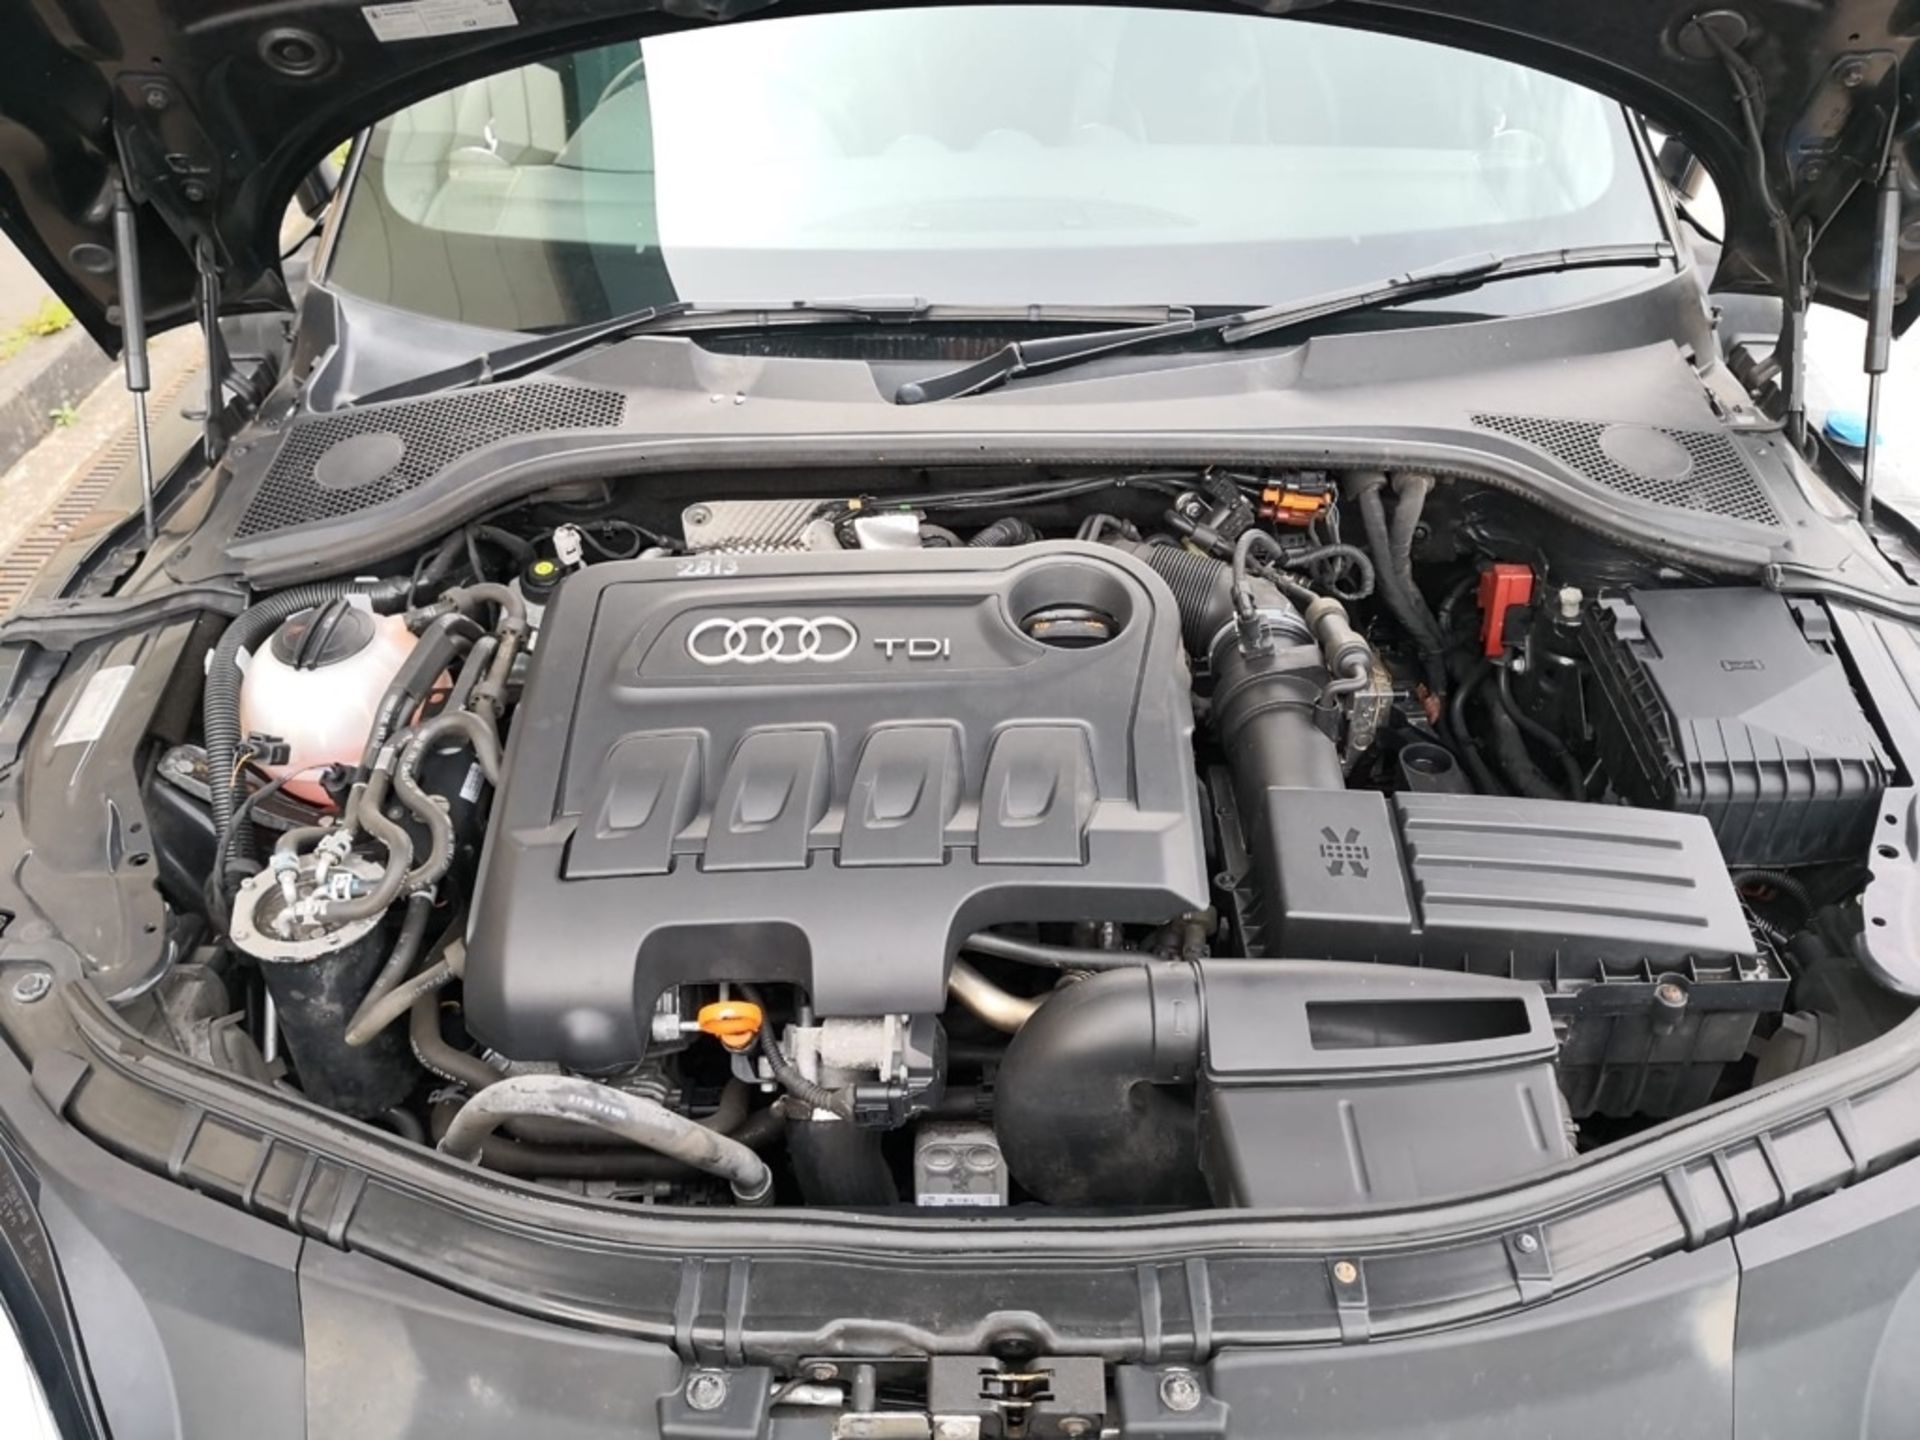 Audi TT 2.0 TDI – Manual – Diesel – 2011- Black Reg: BC11 WFM – 2011 Mileage: 107,000 MOT: 28-04- - Image 7 of 7